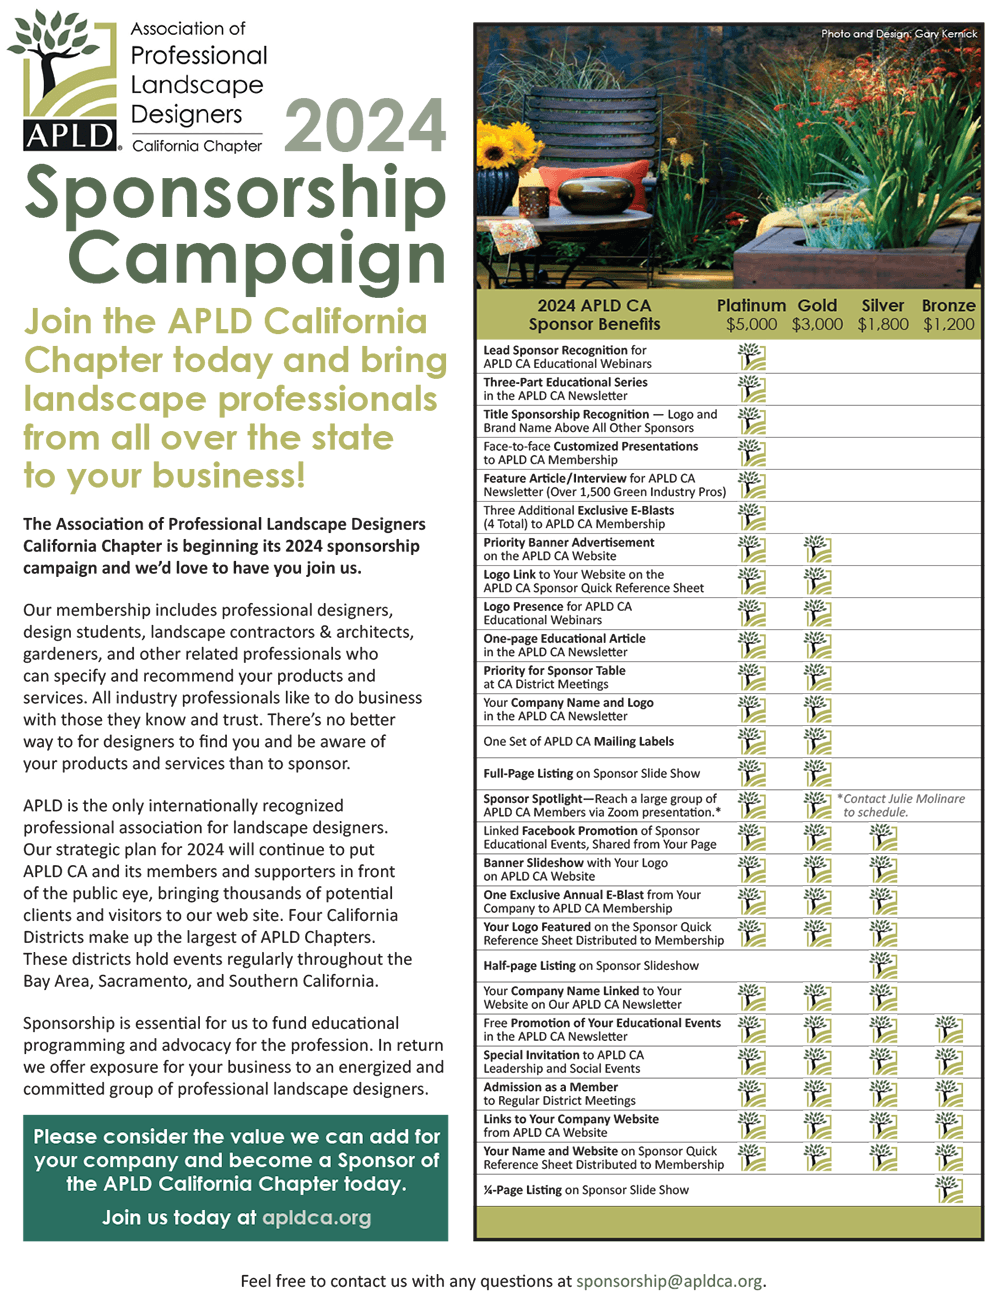 APLD-CA 2024 Sponsorship Campaign: New Sponsor Benefits